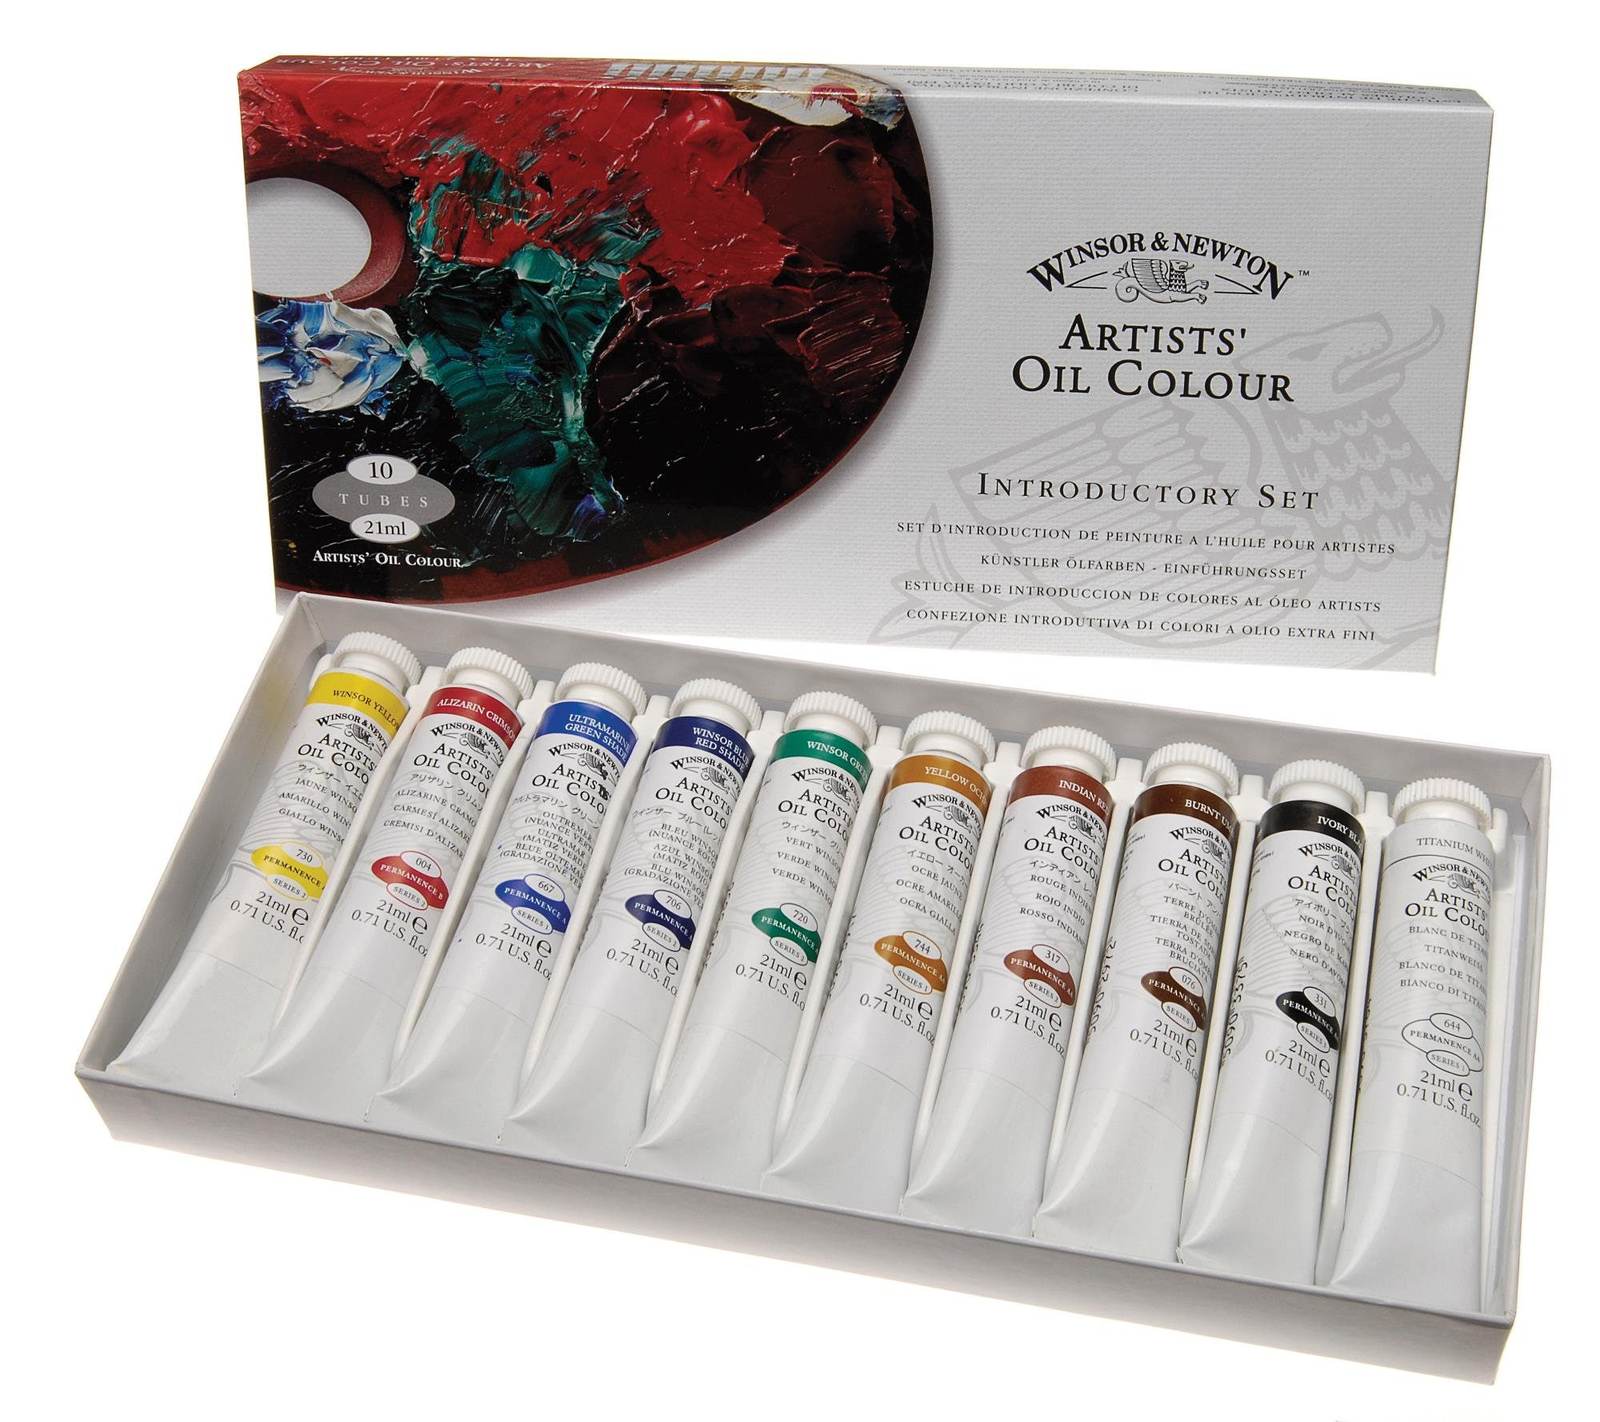 Winsor & Newton Artists' Oil Colour Paint Introductory Set (10X21ml Tubes)